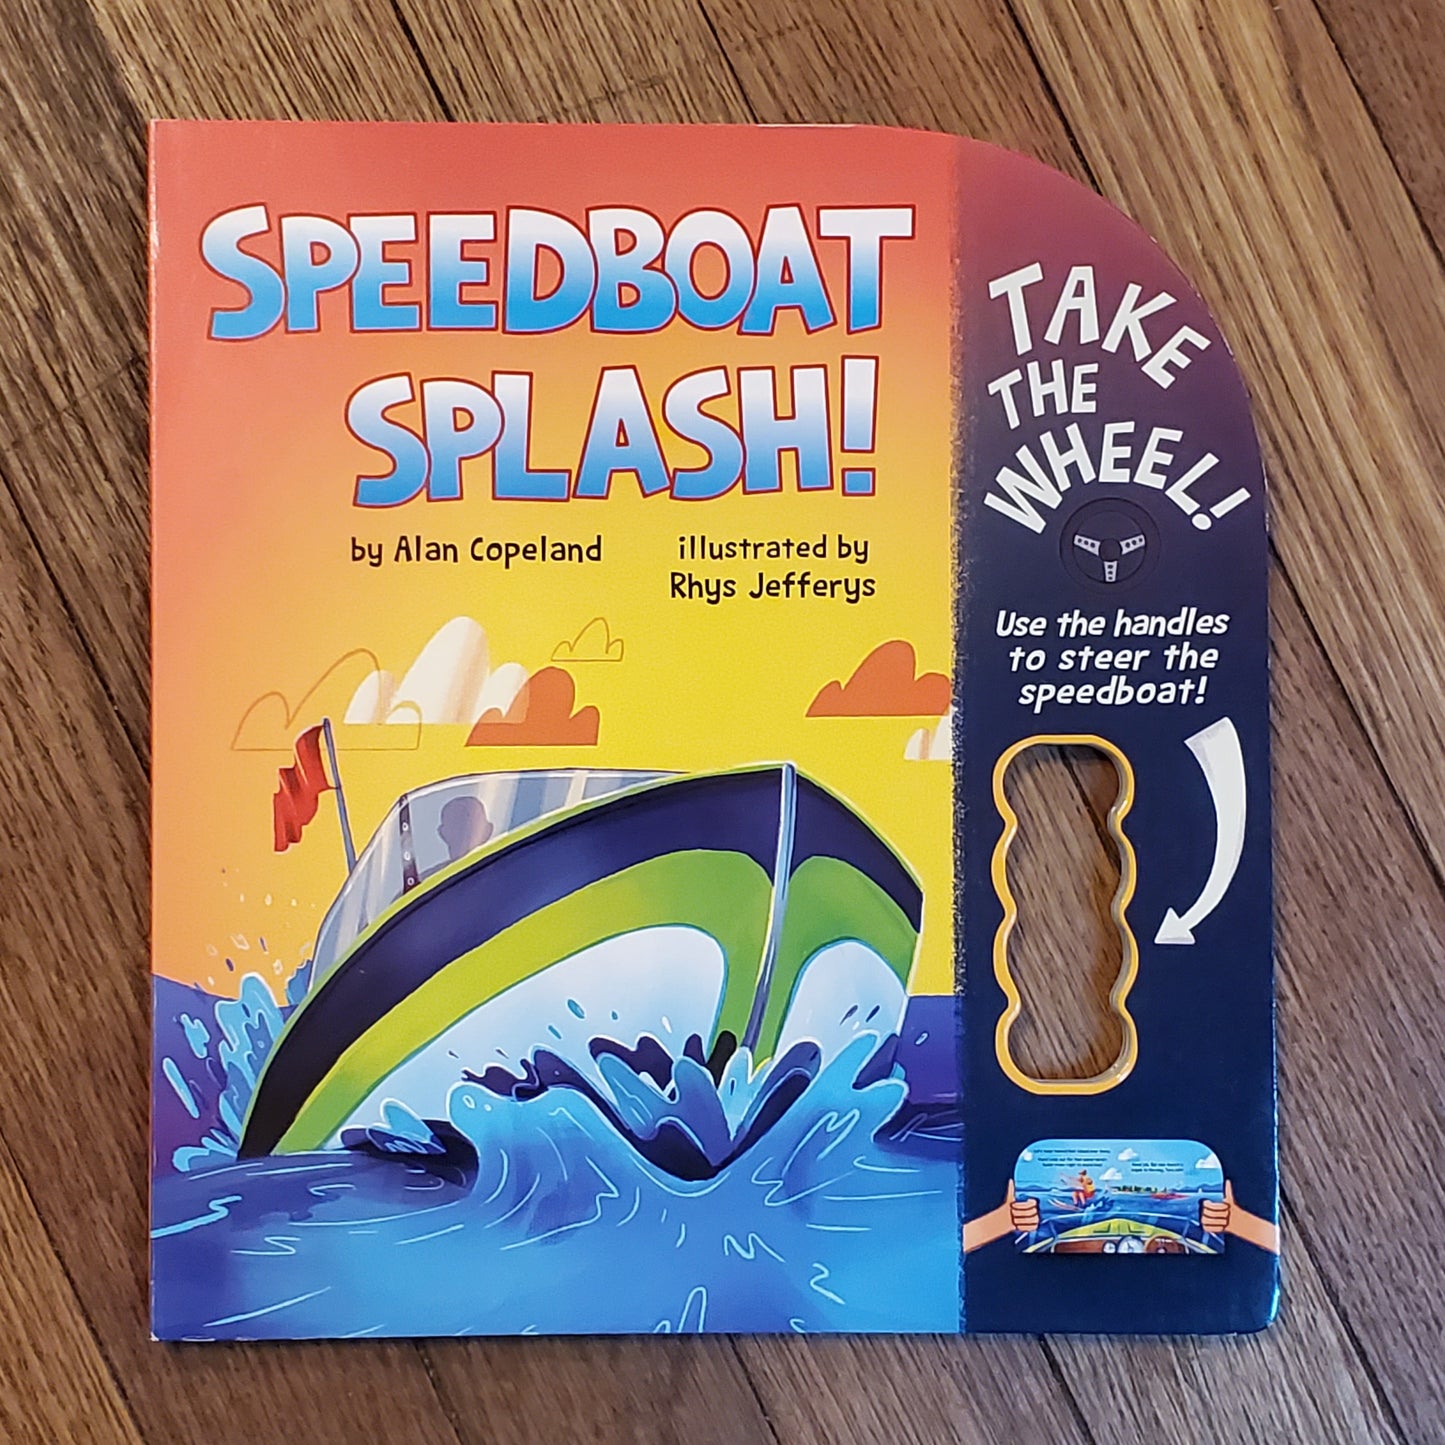 GB Board Book - Speedboat Splash! (Take the Wheel)